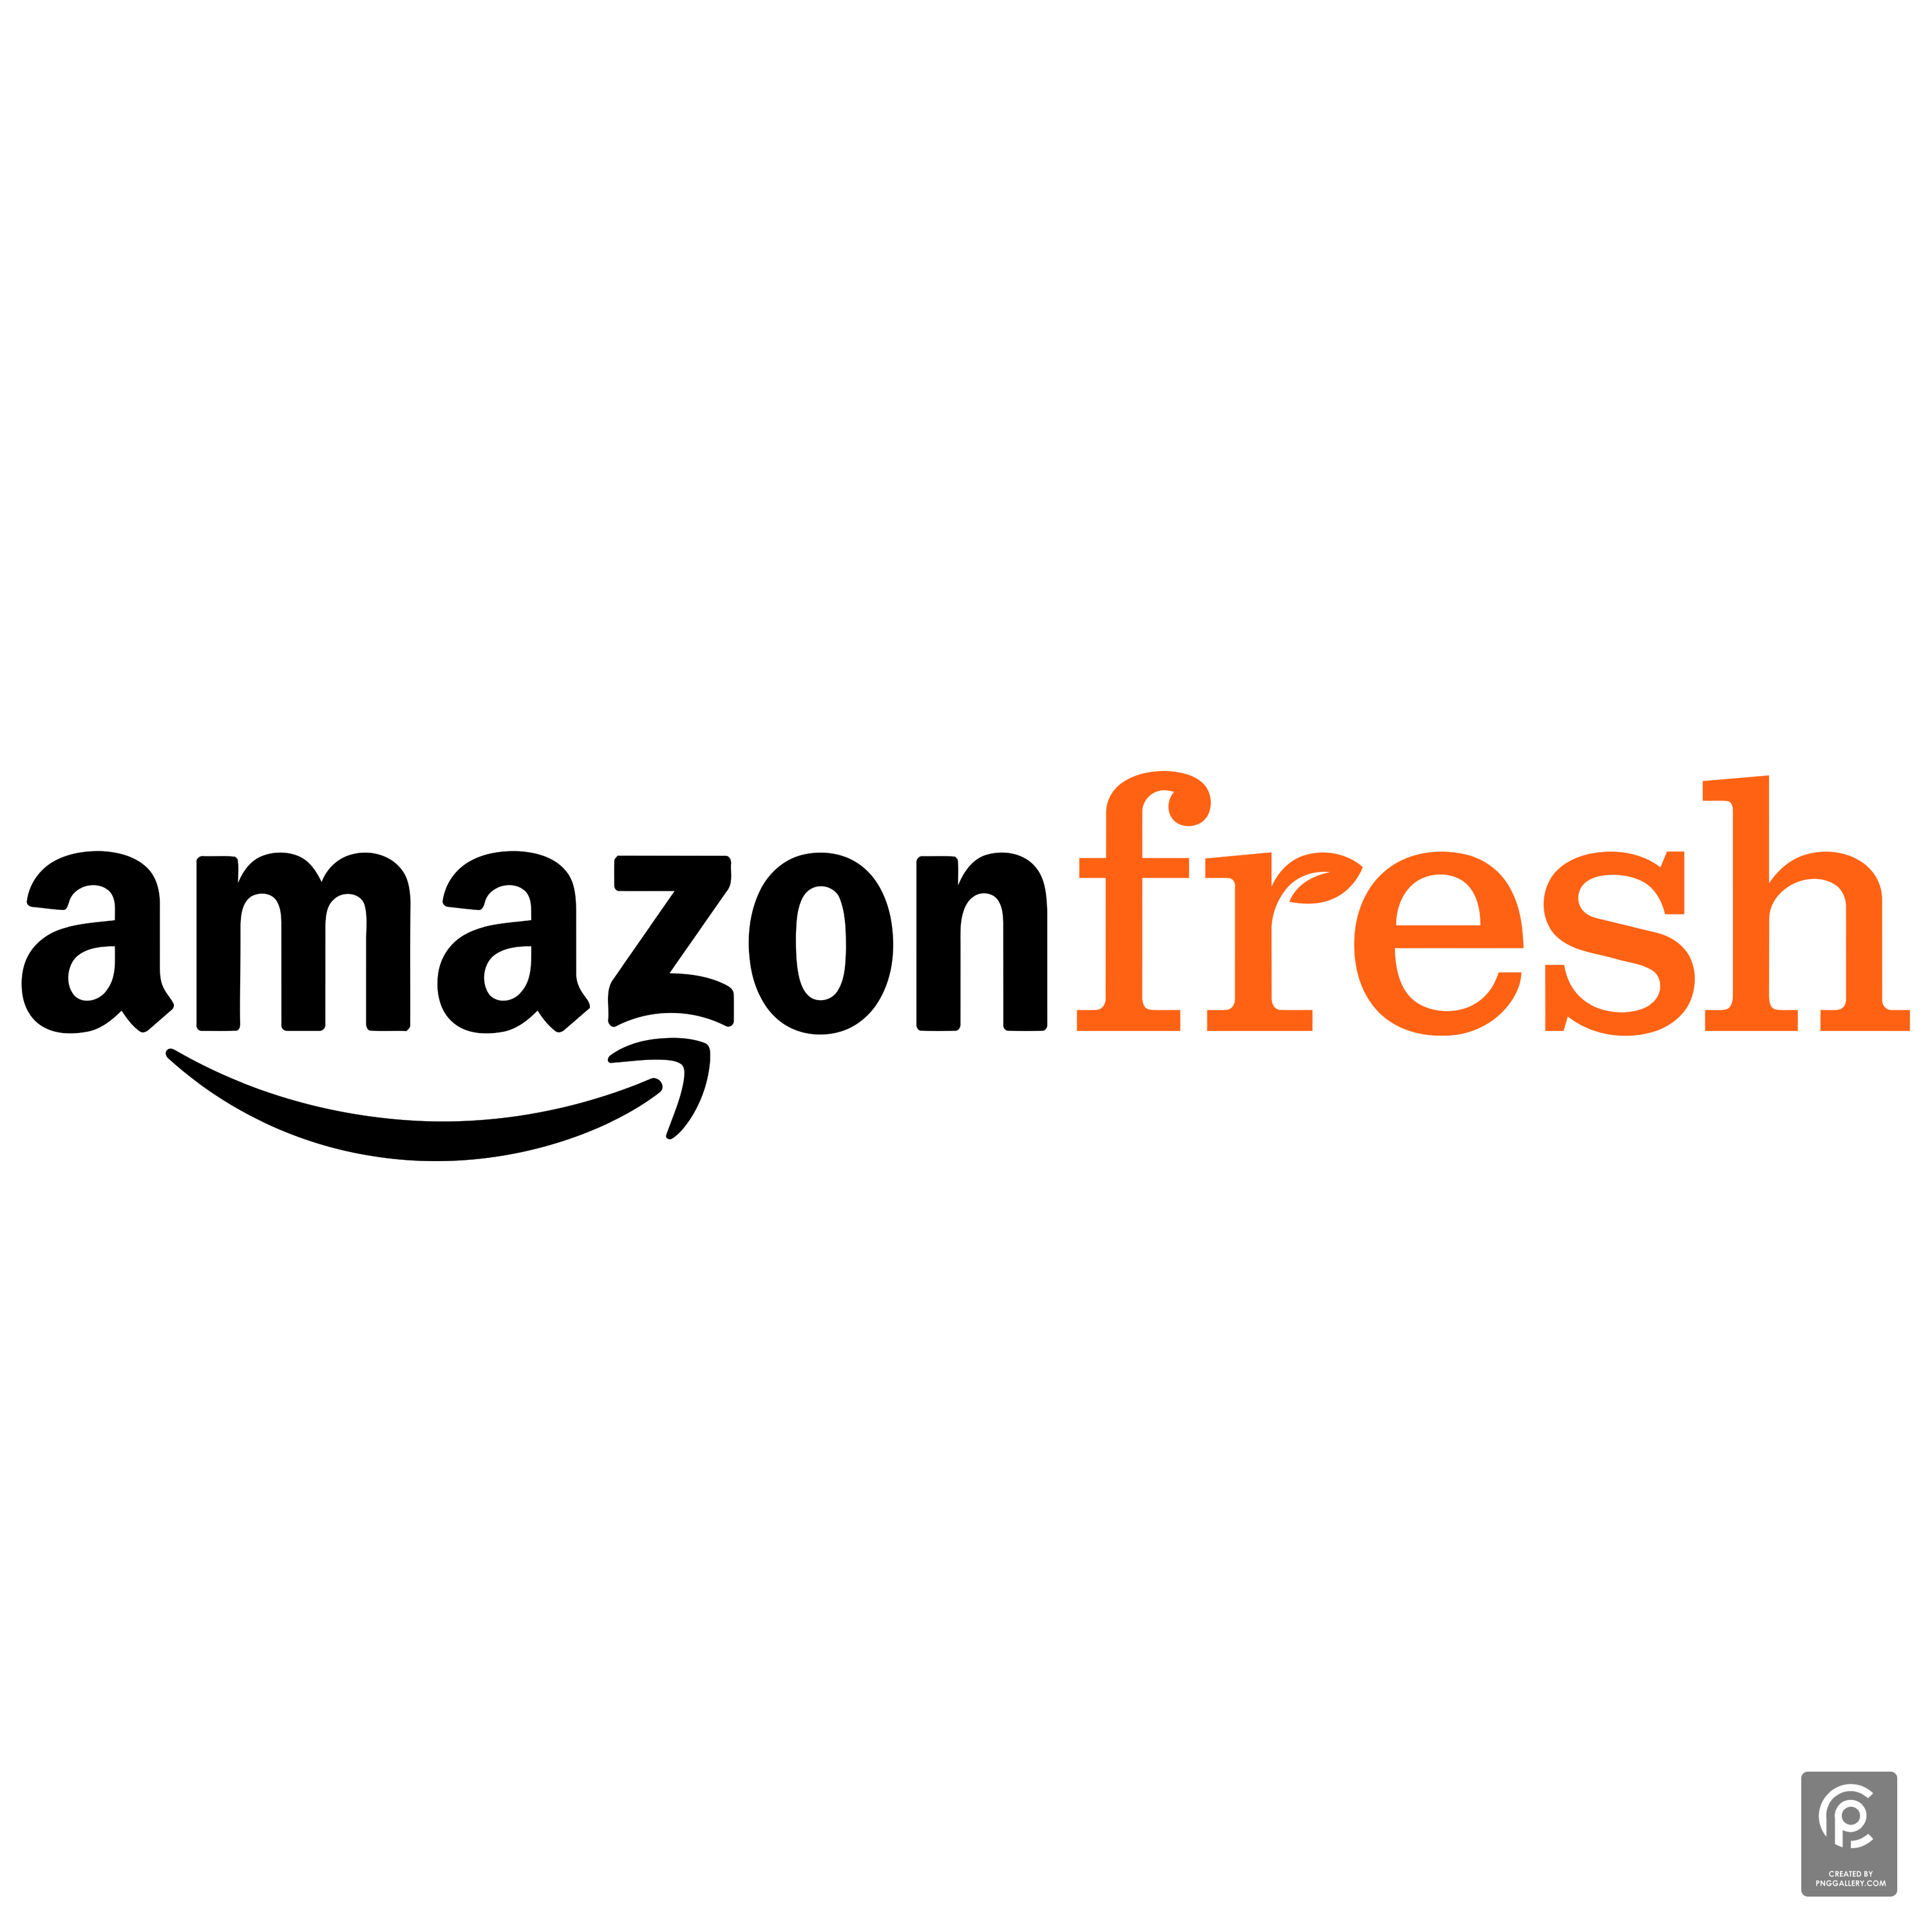 Amazon Fresh Logo Transparent Picture